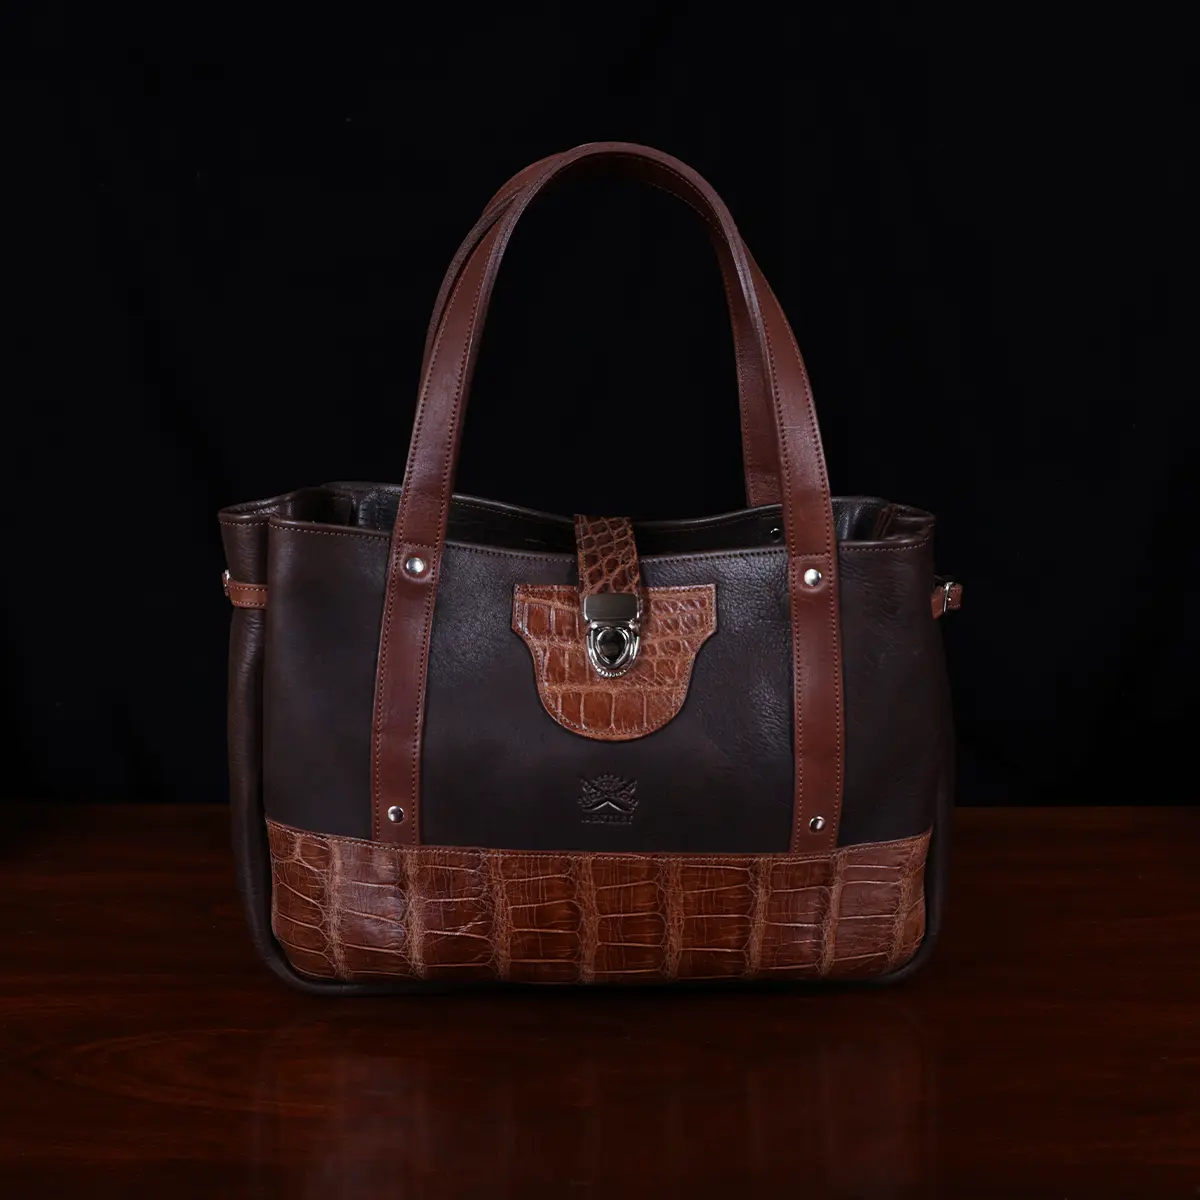 The Alligator Purse, Vintage Leather Tote Bag, Red/Brown/Black